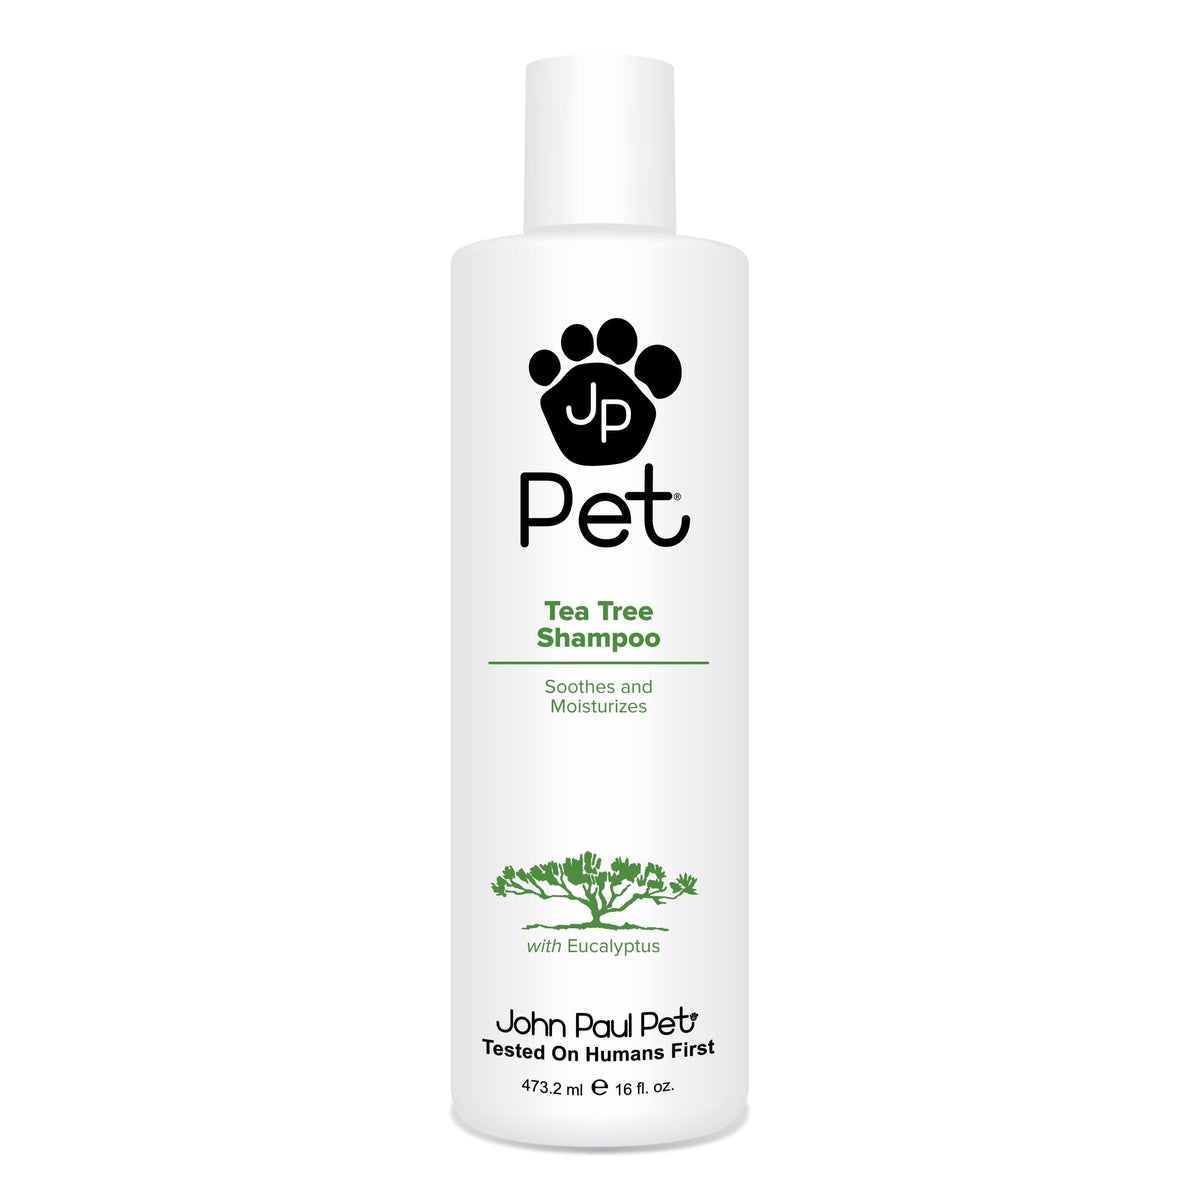 JP Pet Tea Tree Shampoo 473ml Pet - JP Pet - Luxe Pacifique